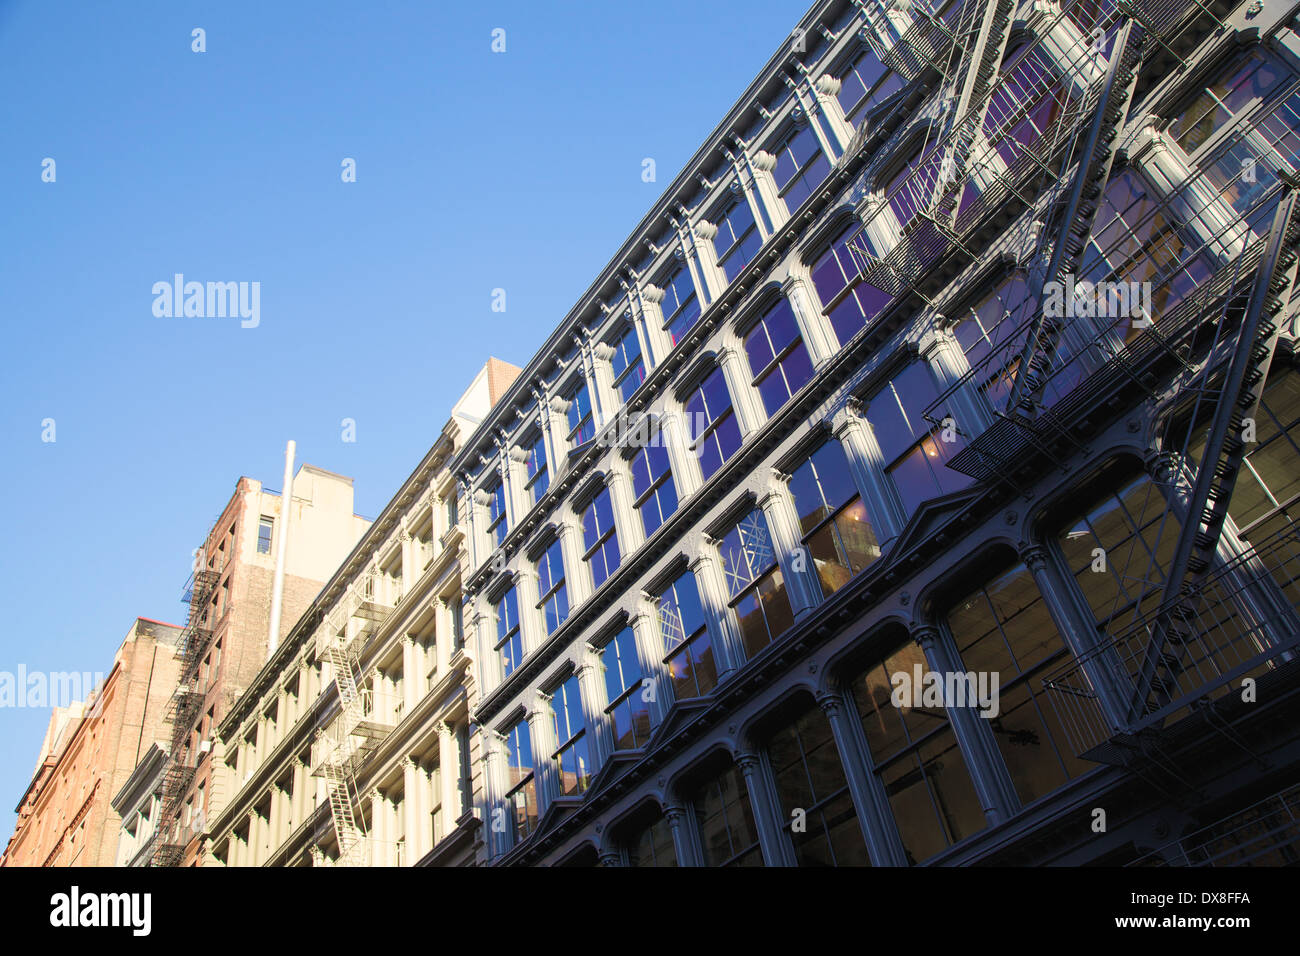 Historic cast iron buildings in New York City's Soho District Stock Photo